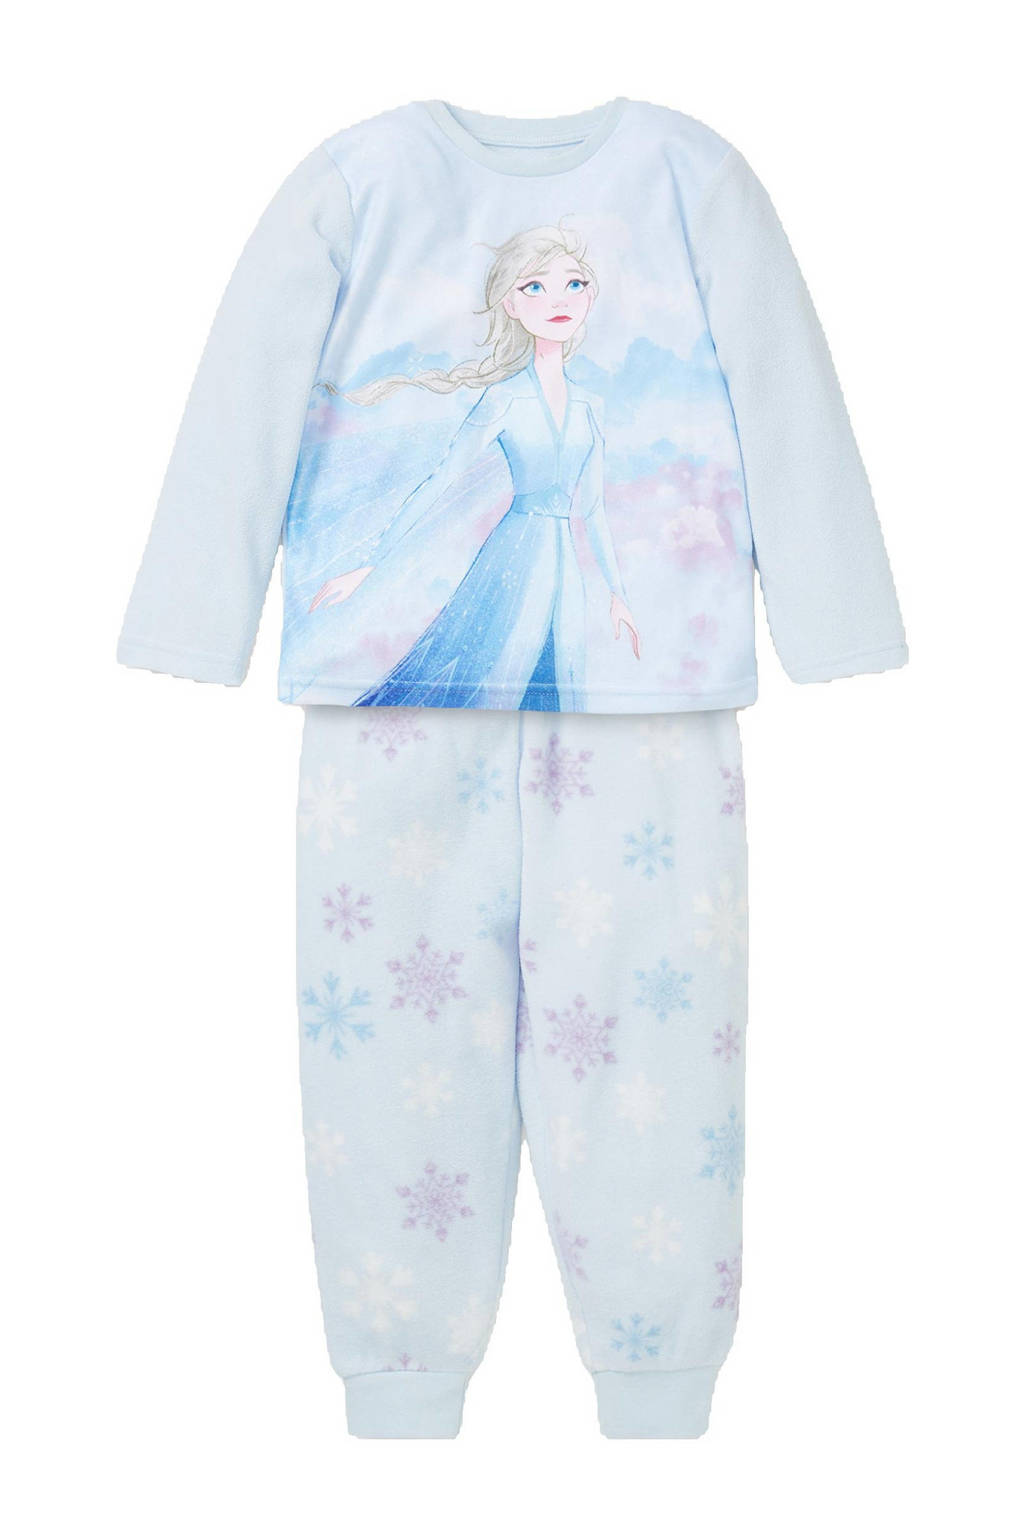 C&A pyjama Frozen lichtblauw | wehkamp